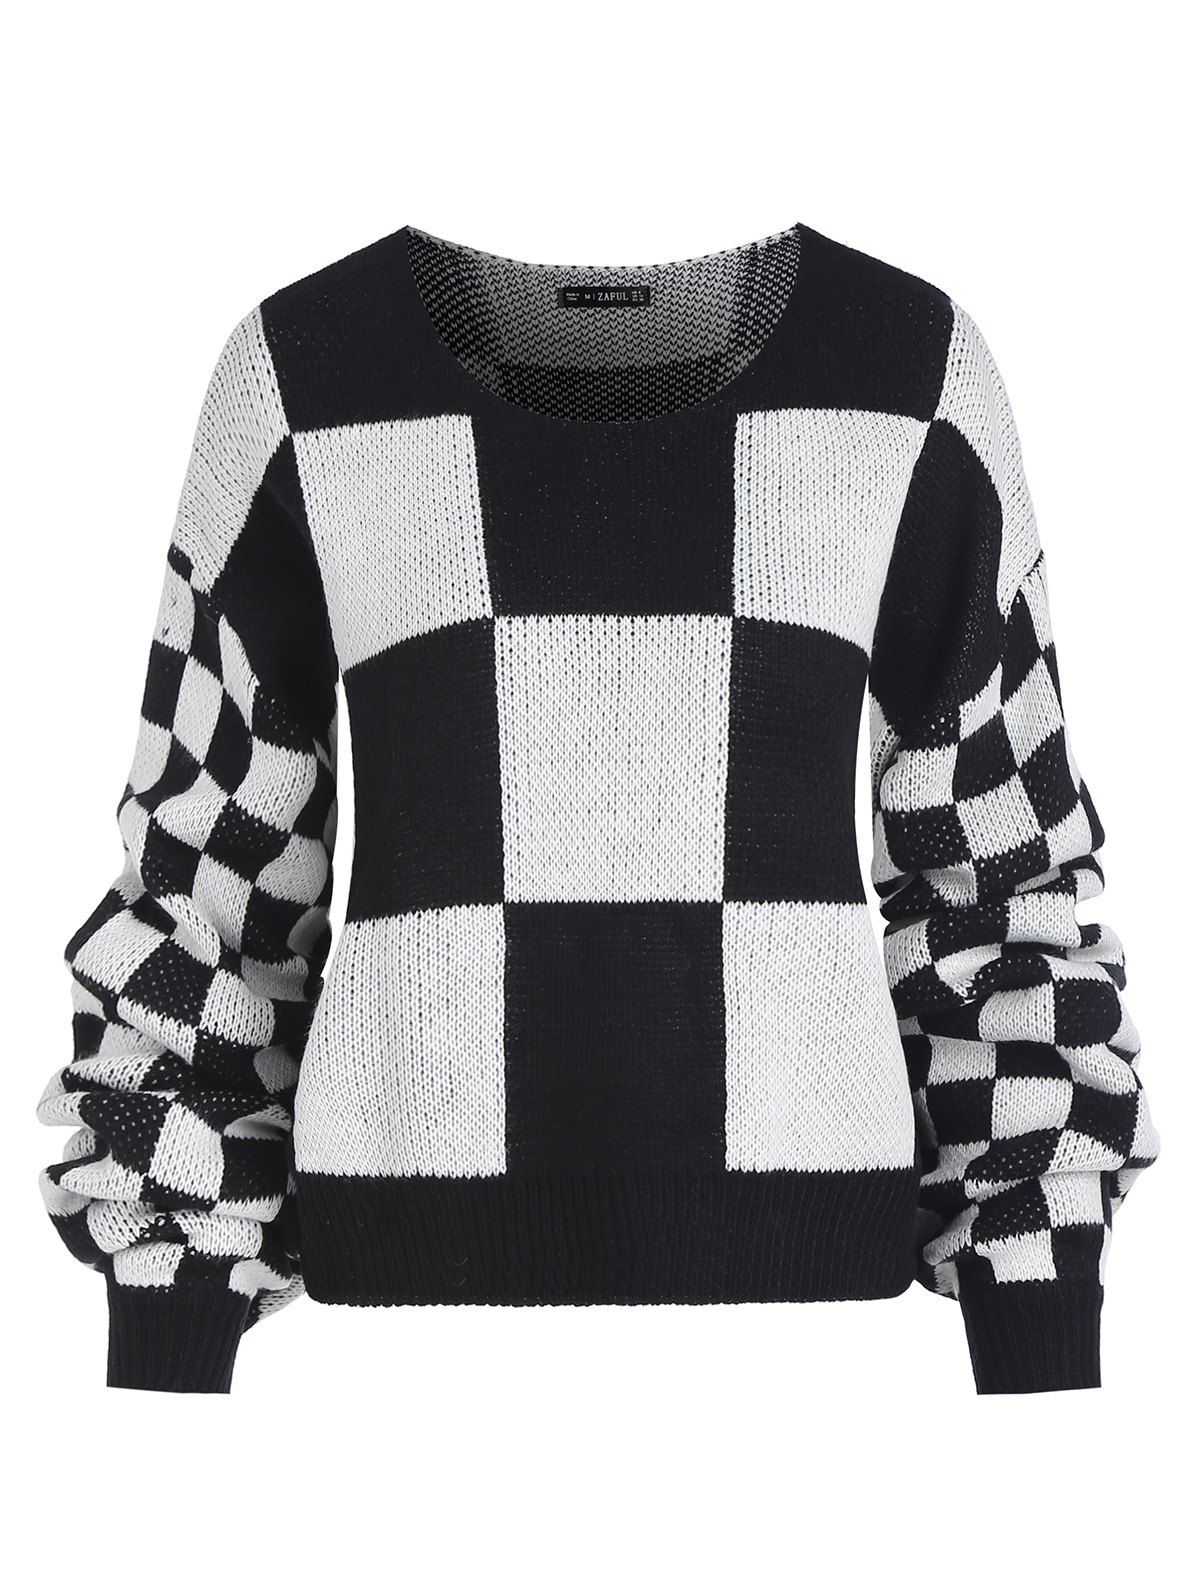 Checkerboard Plaid Drop Shoulder Sweater - BLACK M